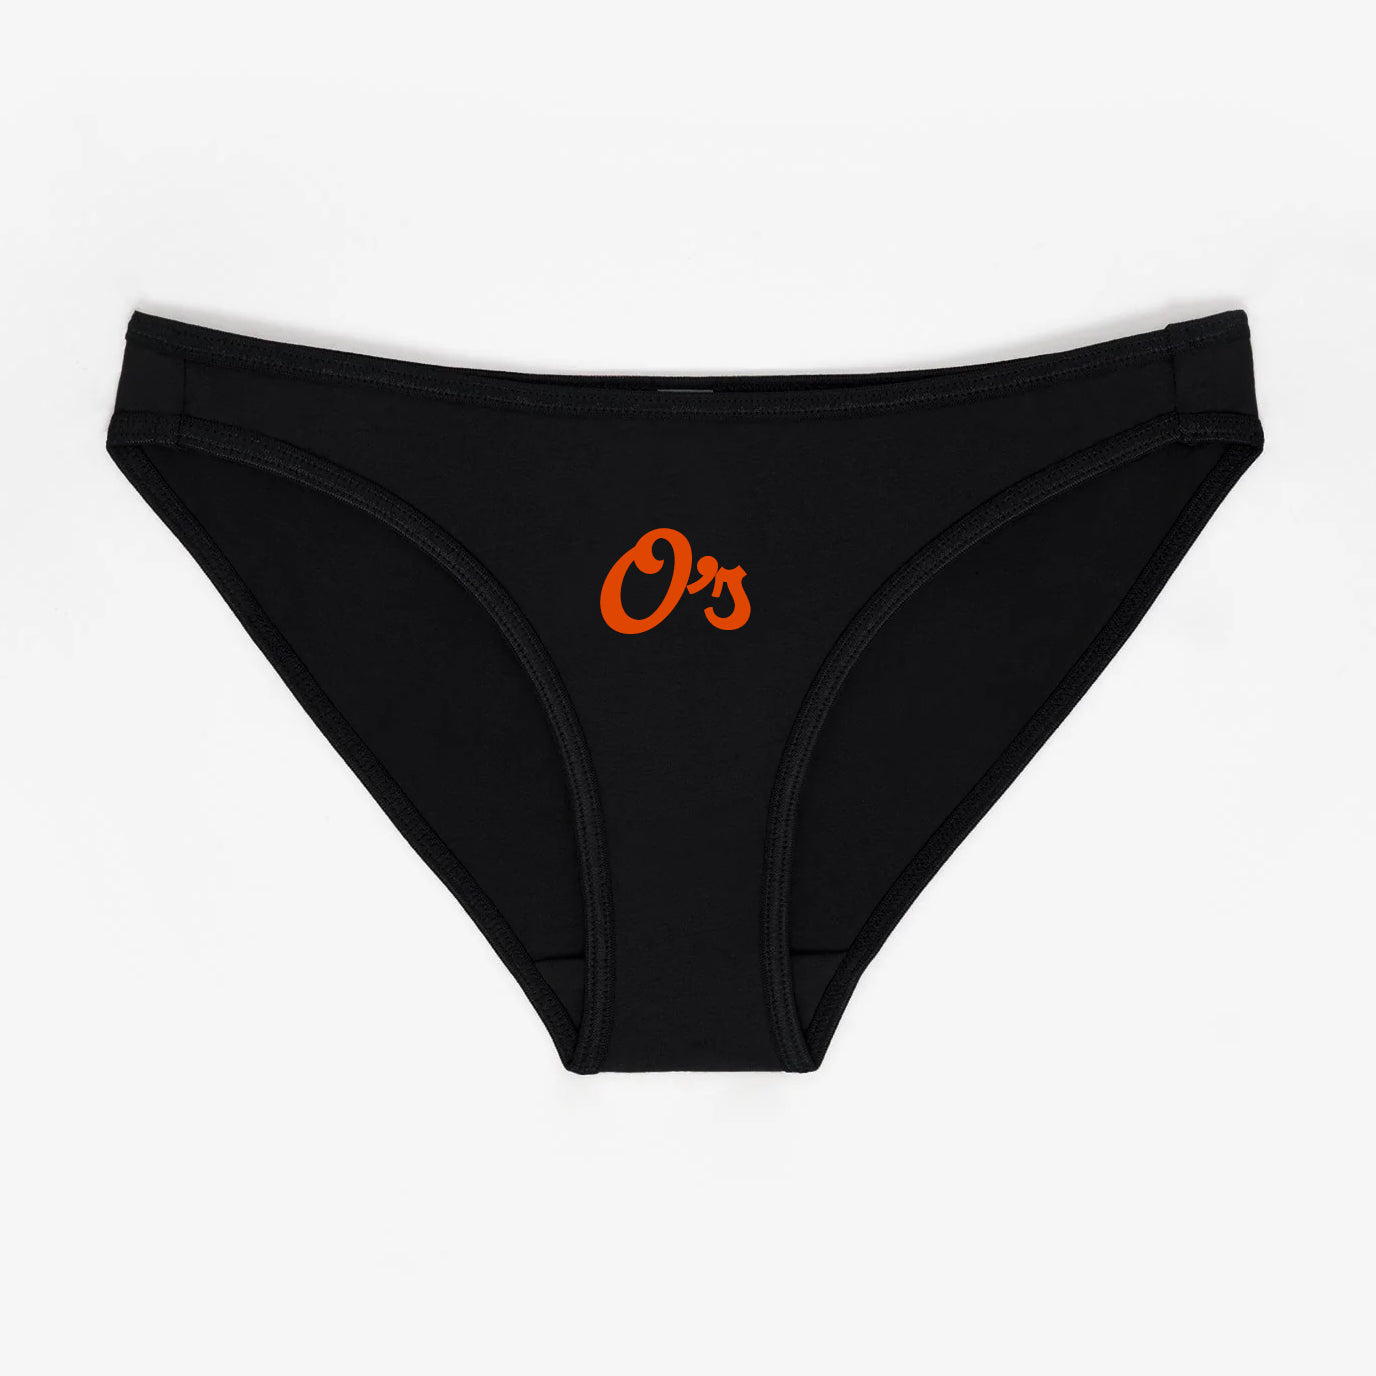 Orioles Black and Orange Baseball Panties - Rally Panties